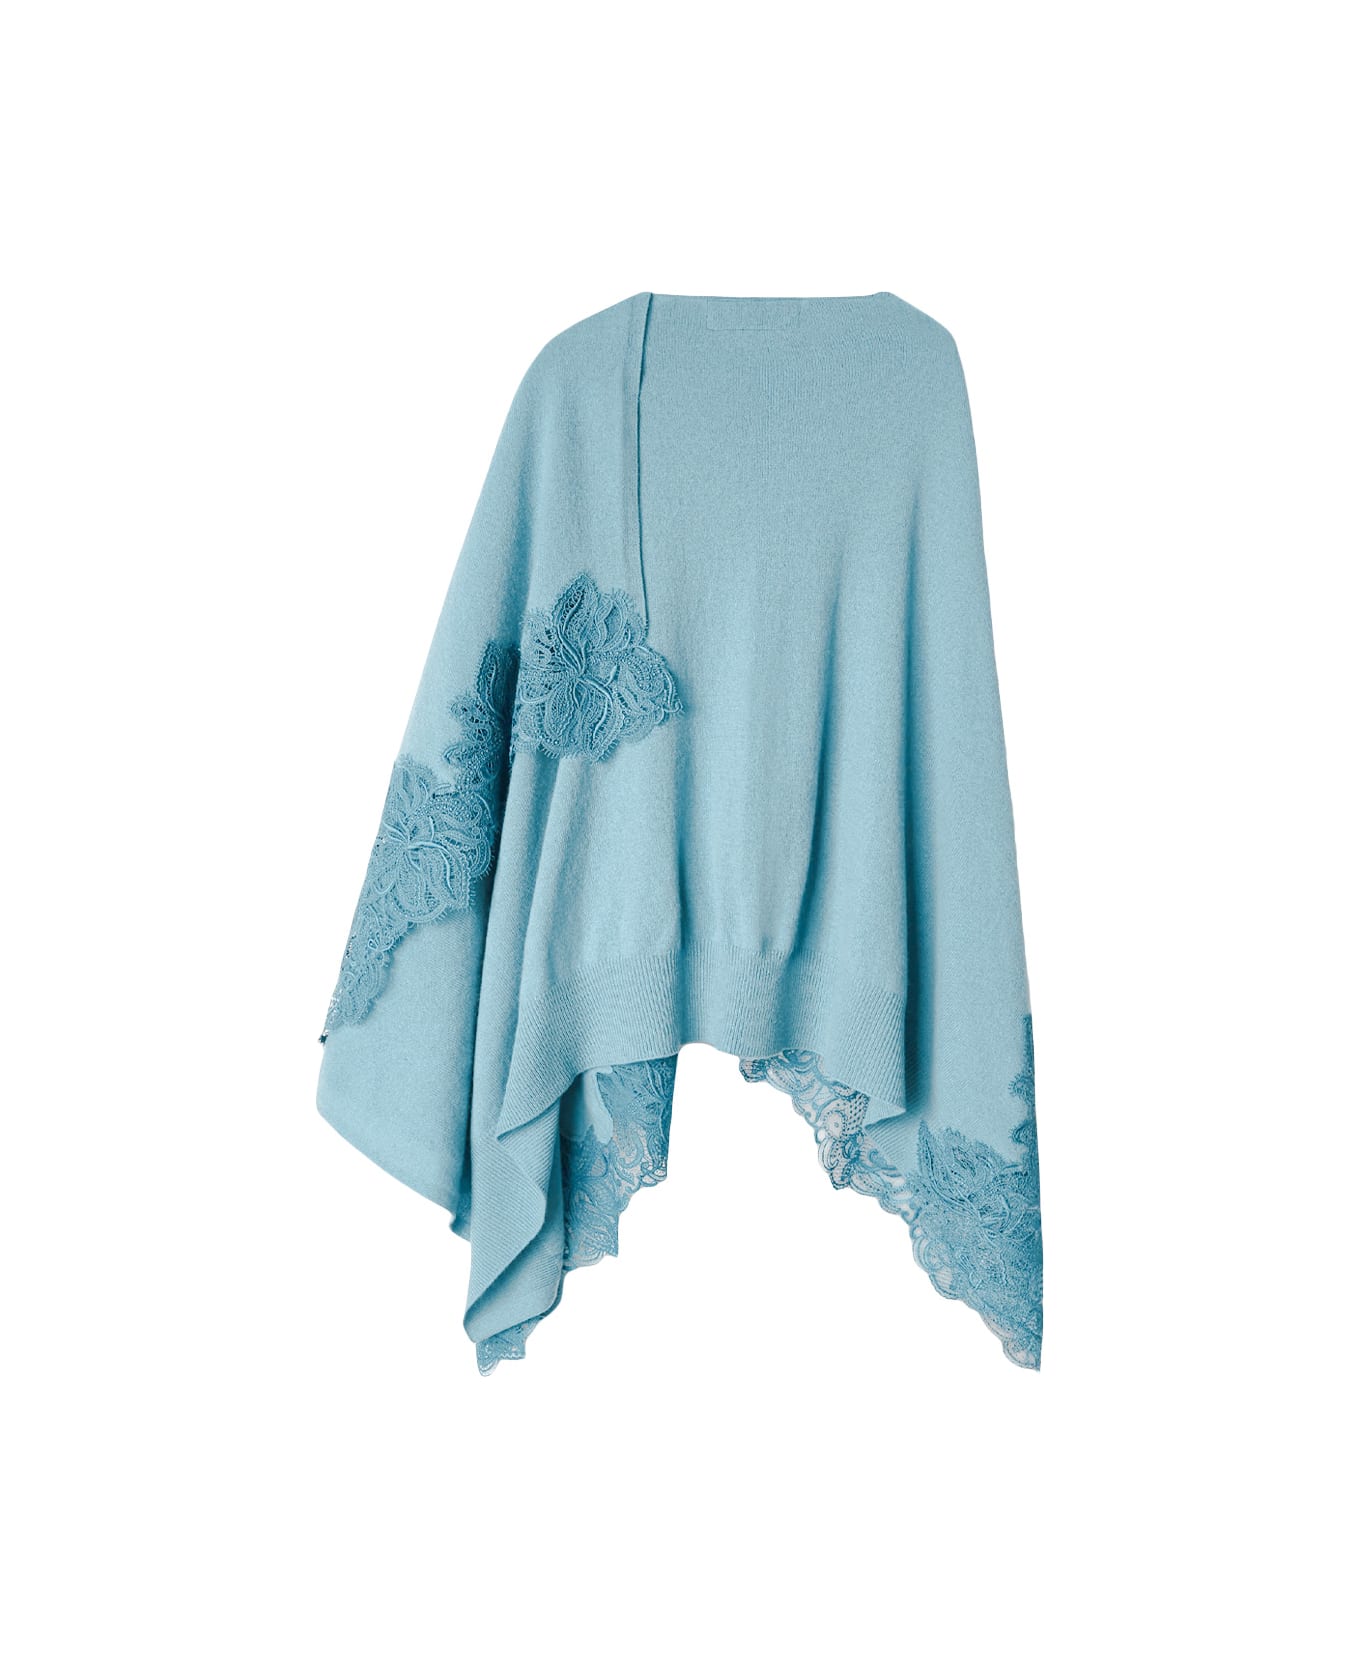 Ermanno Scervino Light Blue 100% Cashmere Knitted Mantella - Blue